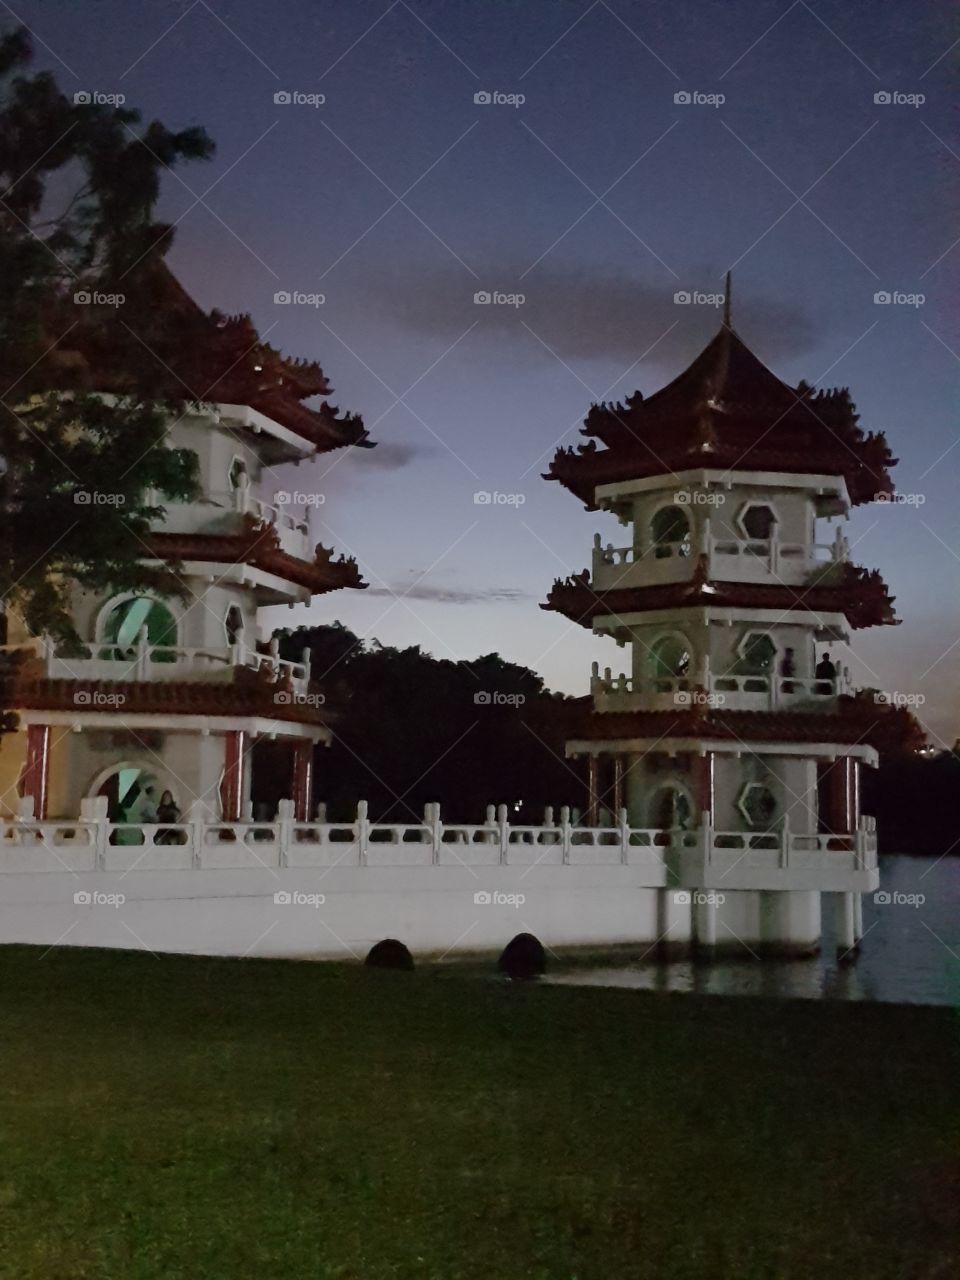 Twin Pagoda